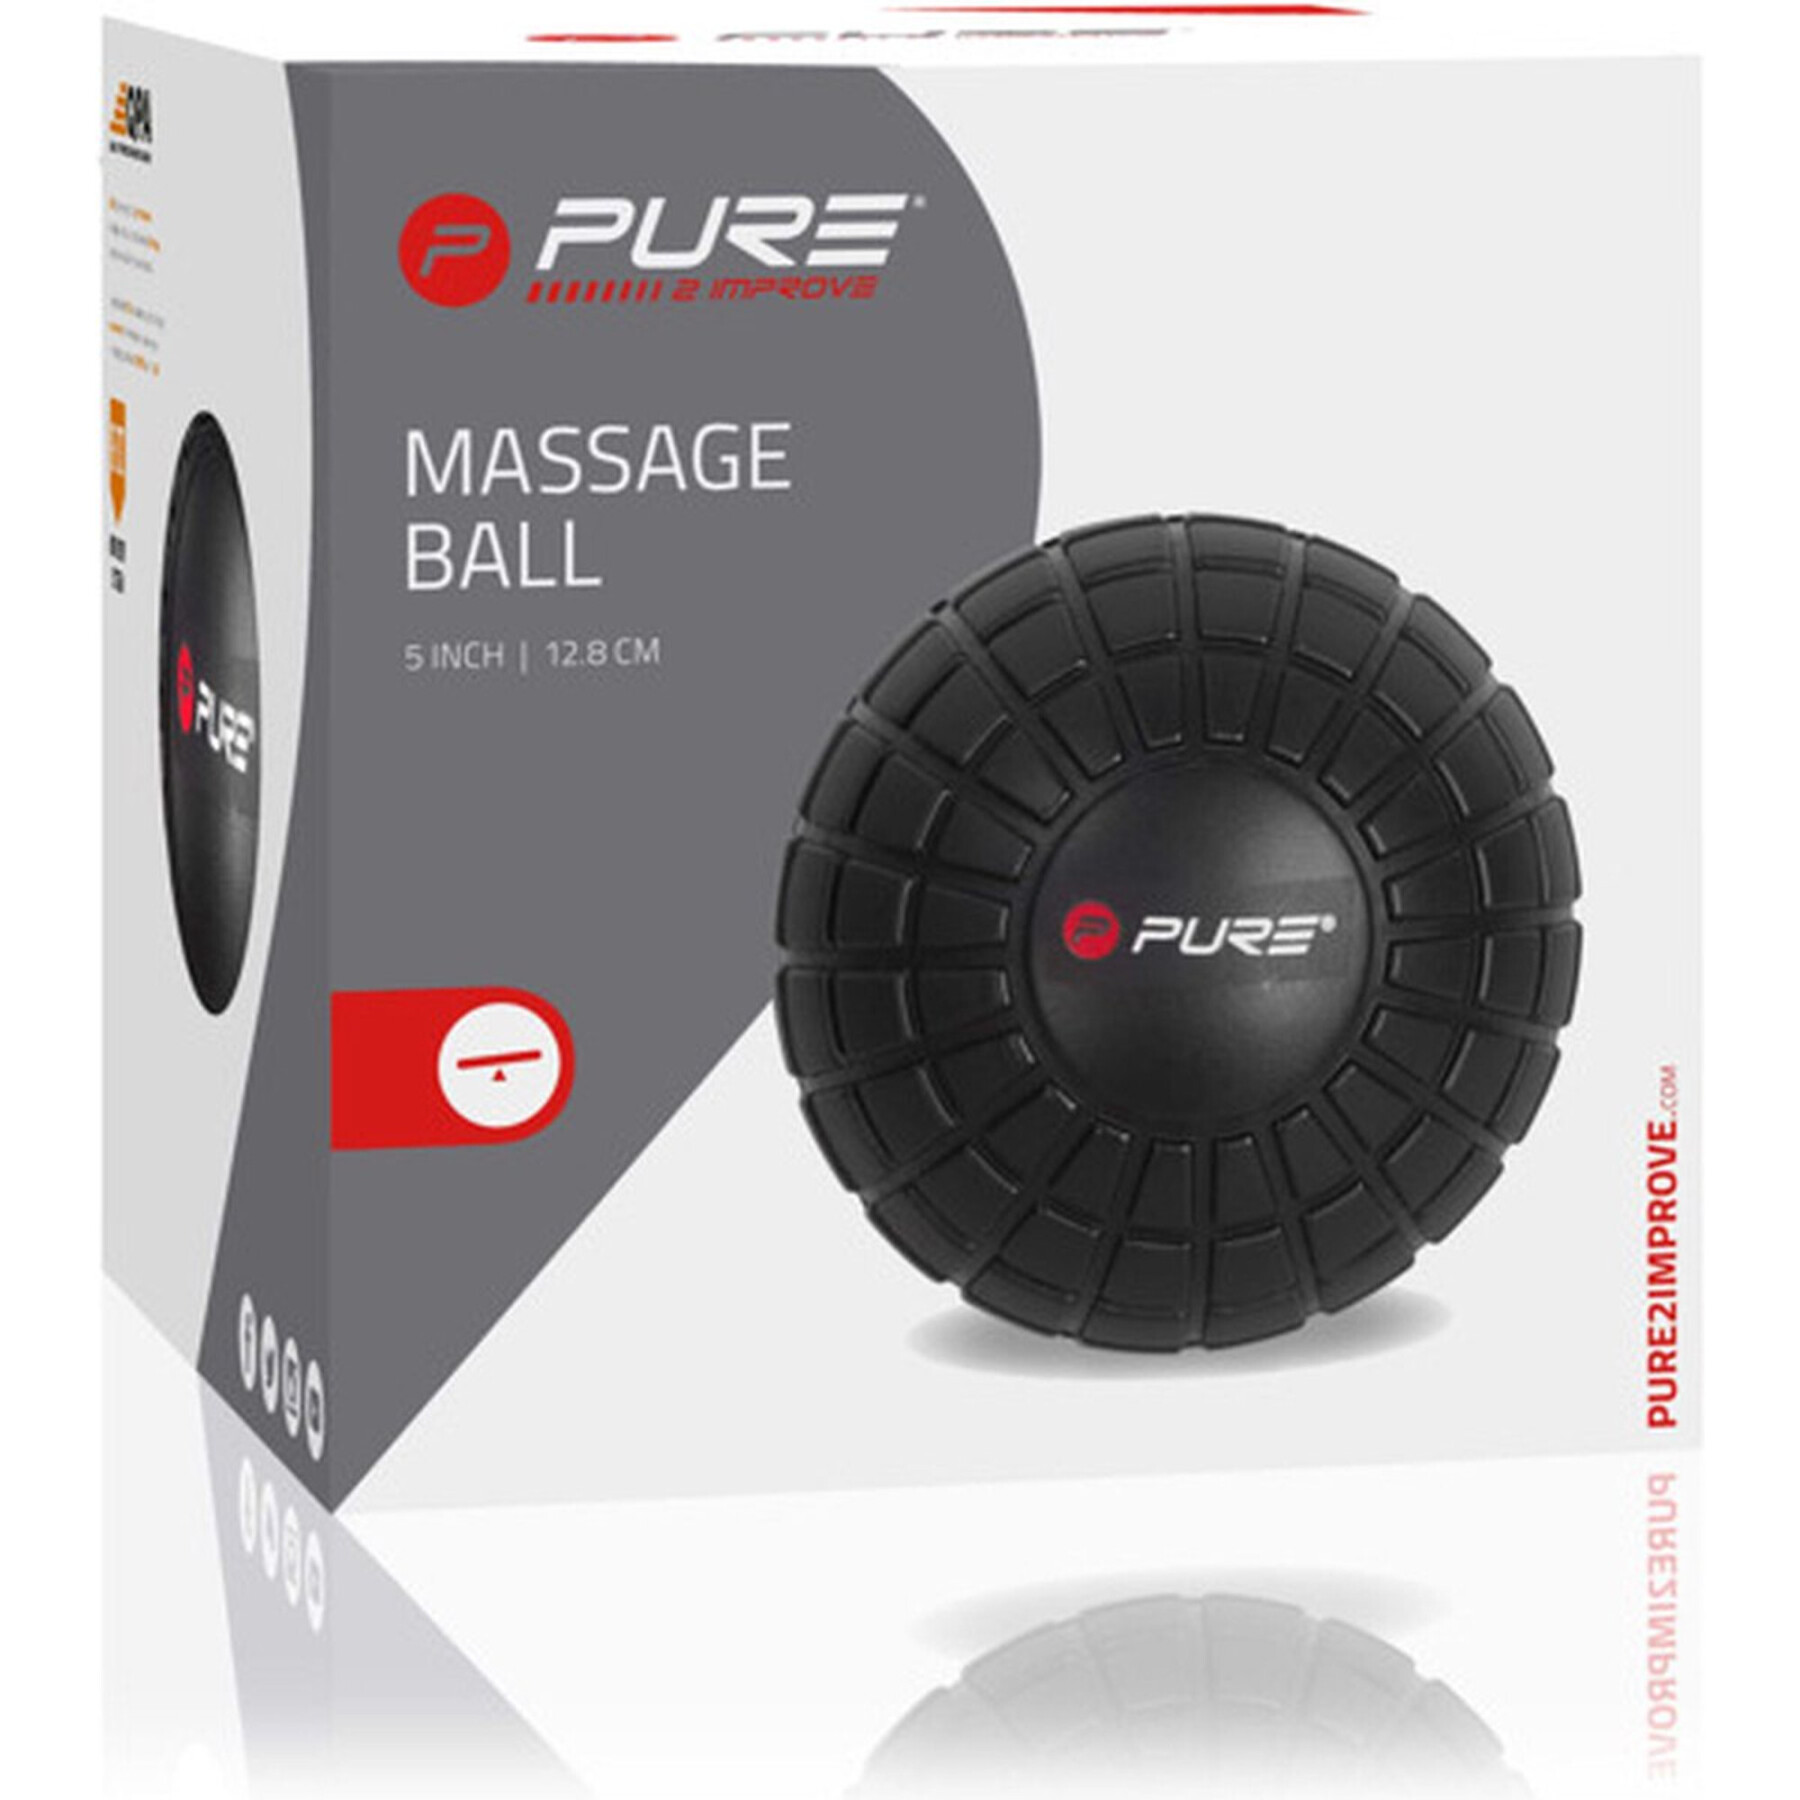 Massageball Pure2Improve recovery